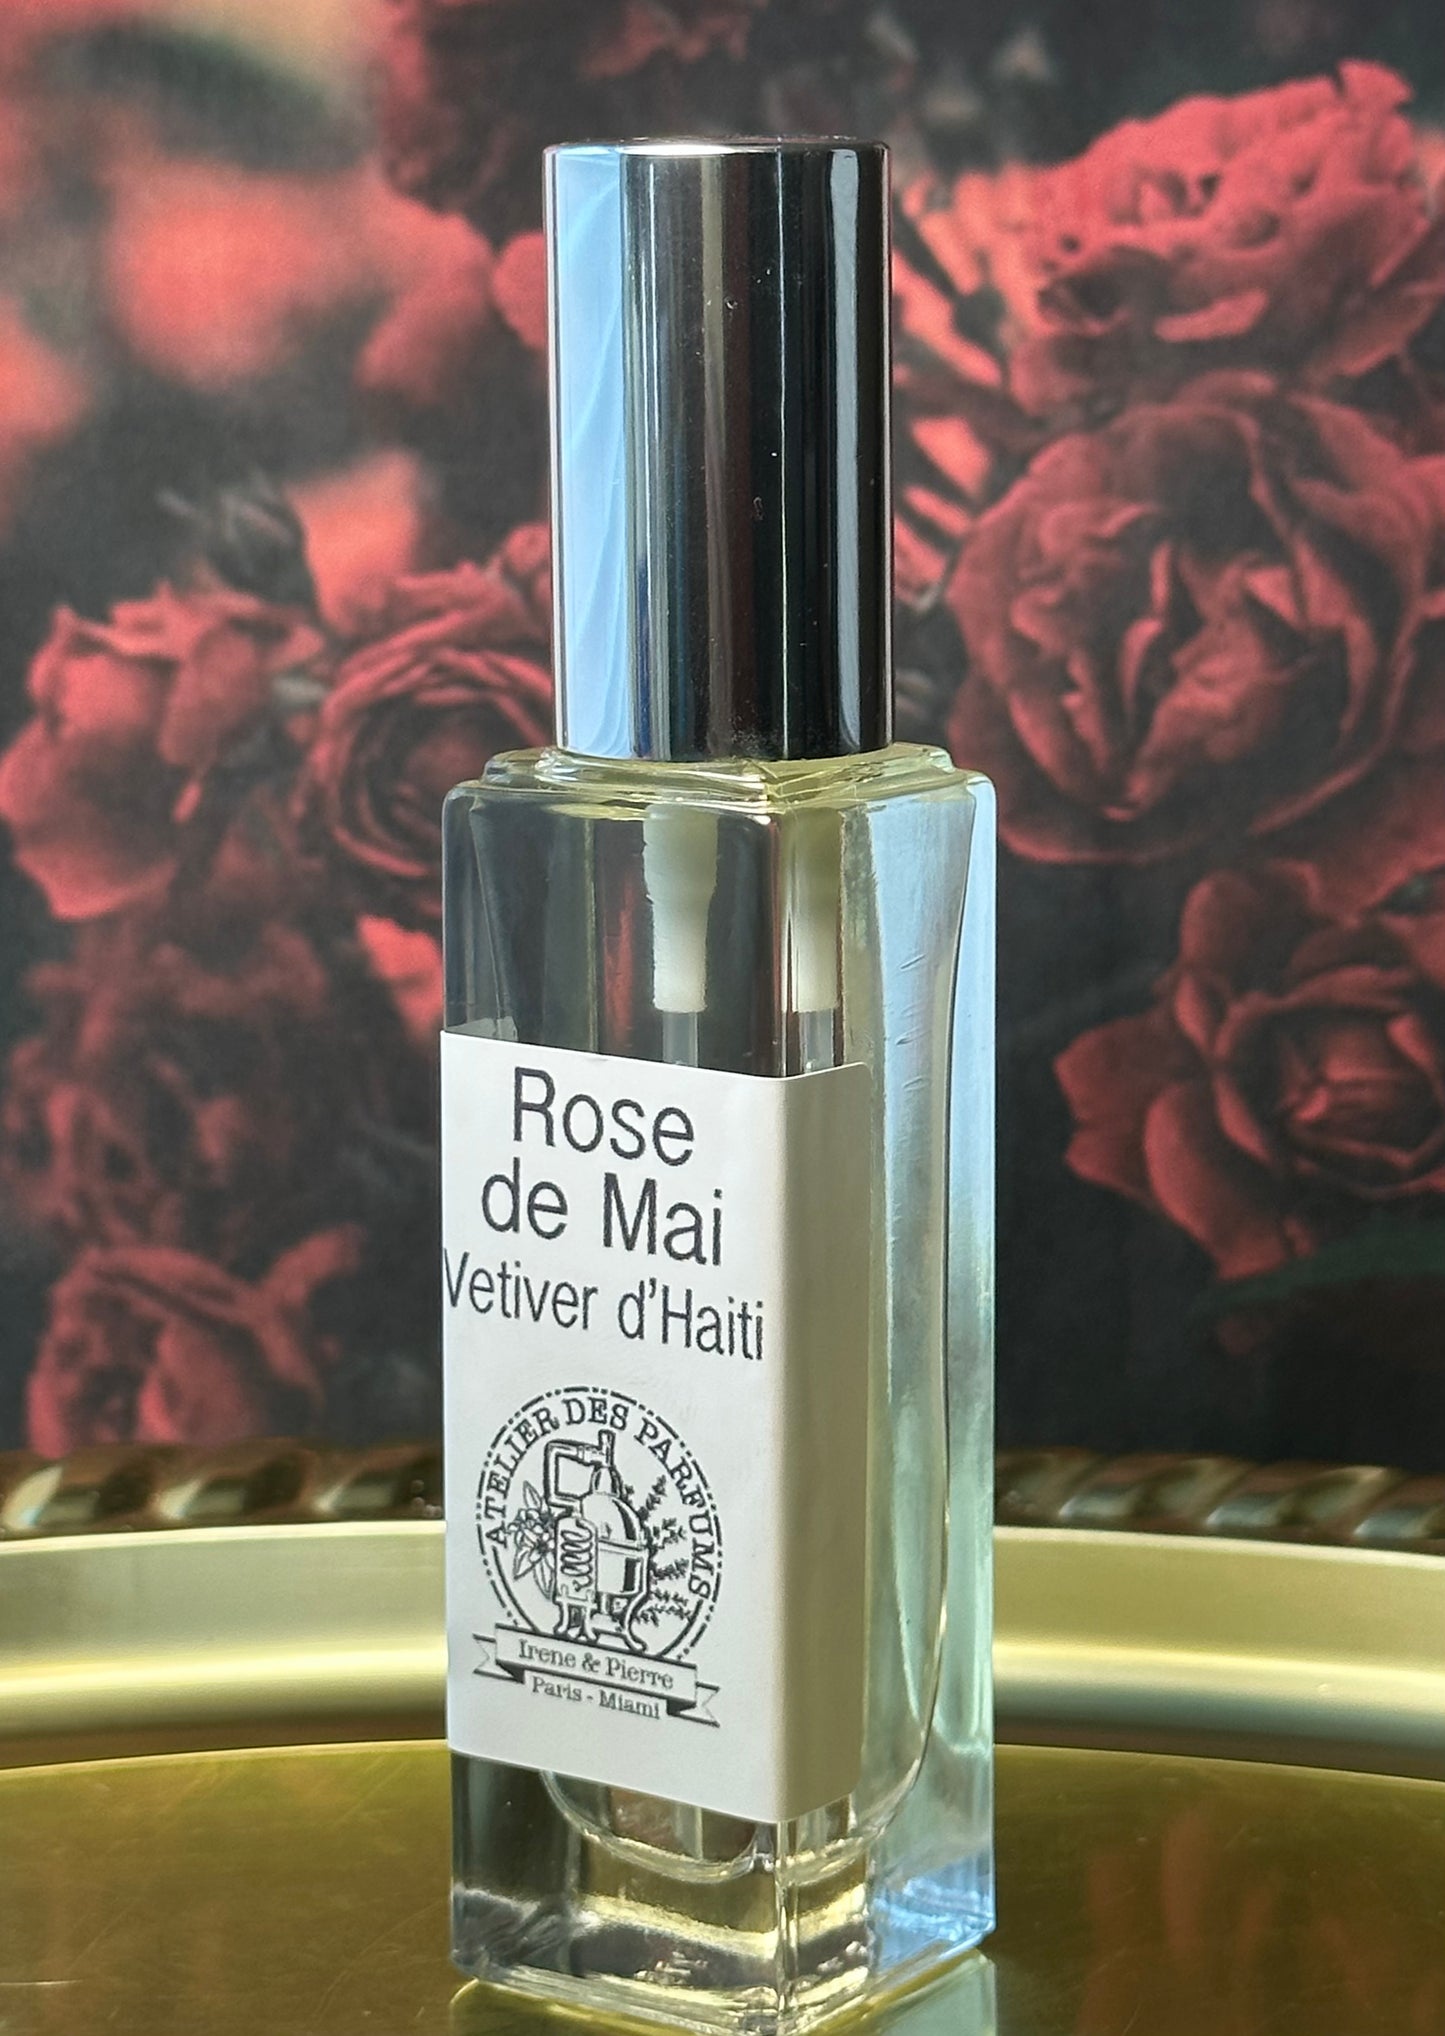 Rose De Mai Vetiver d'Haiti Perfume